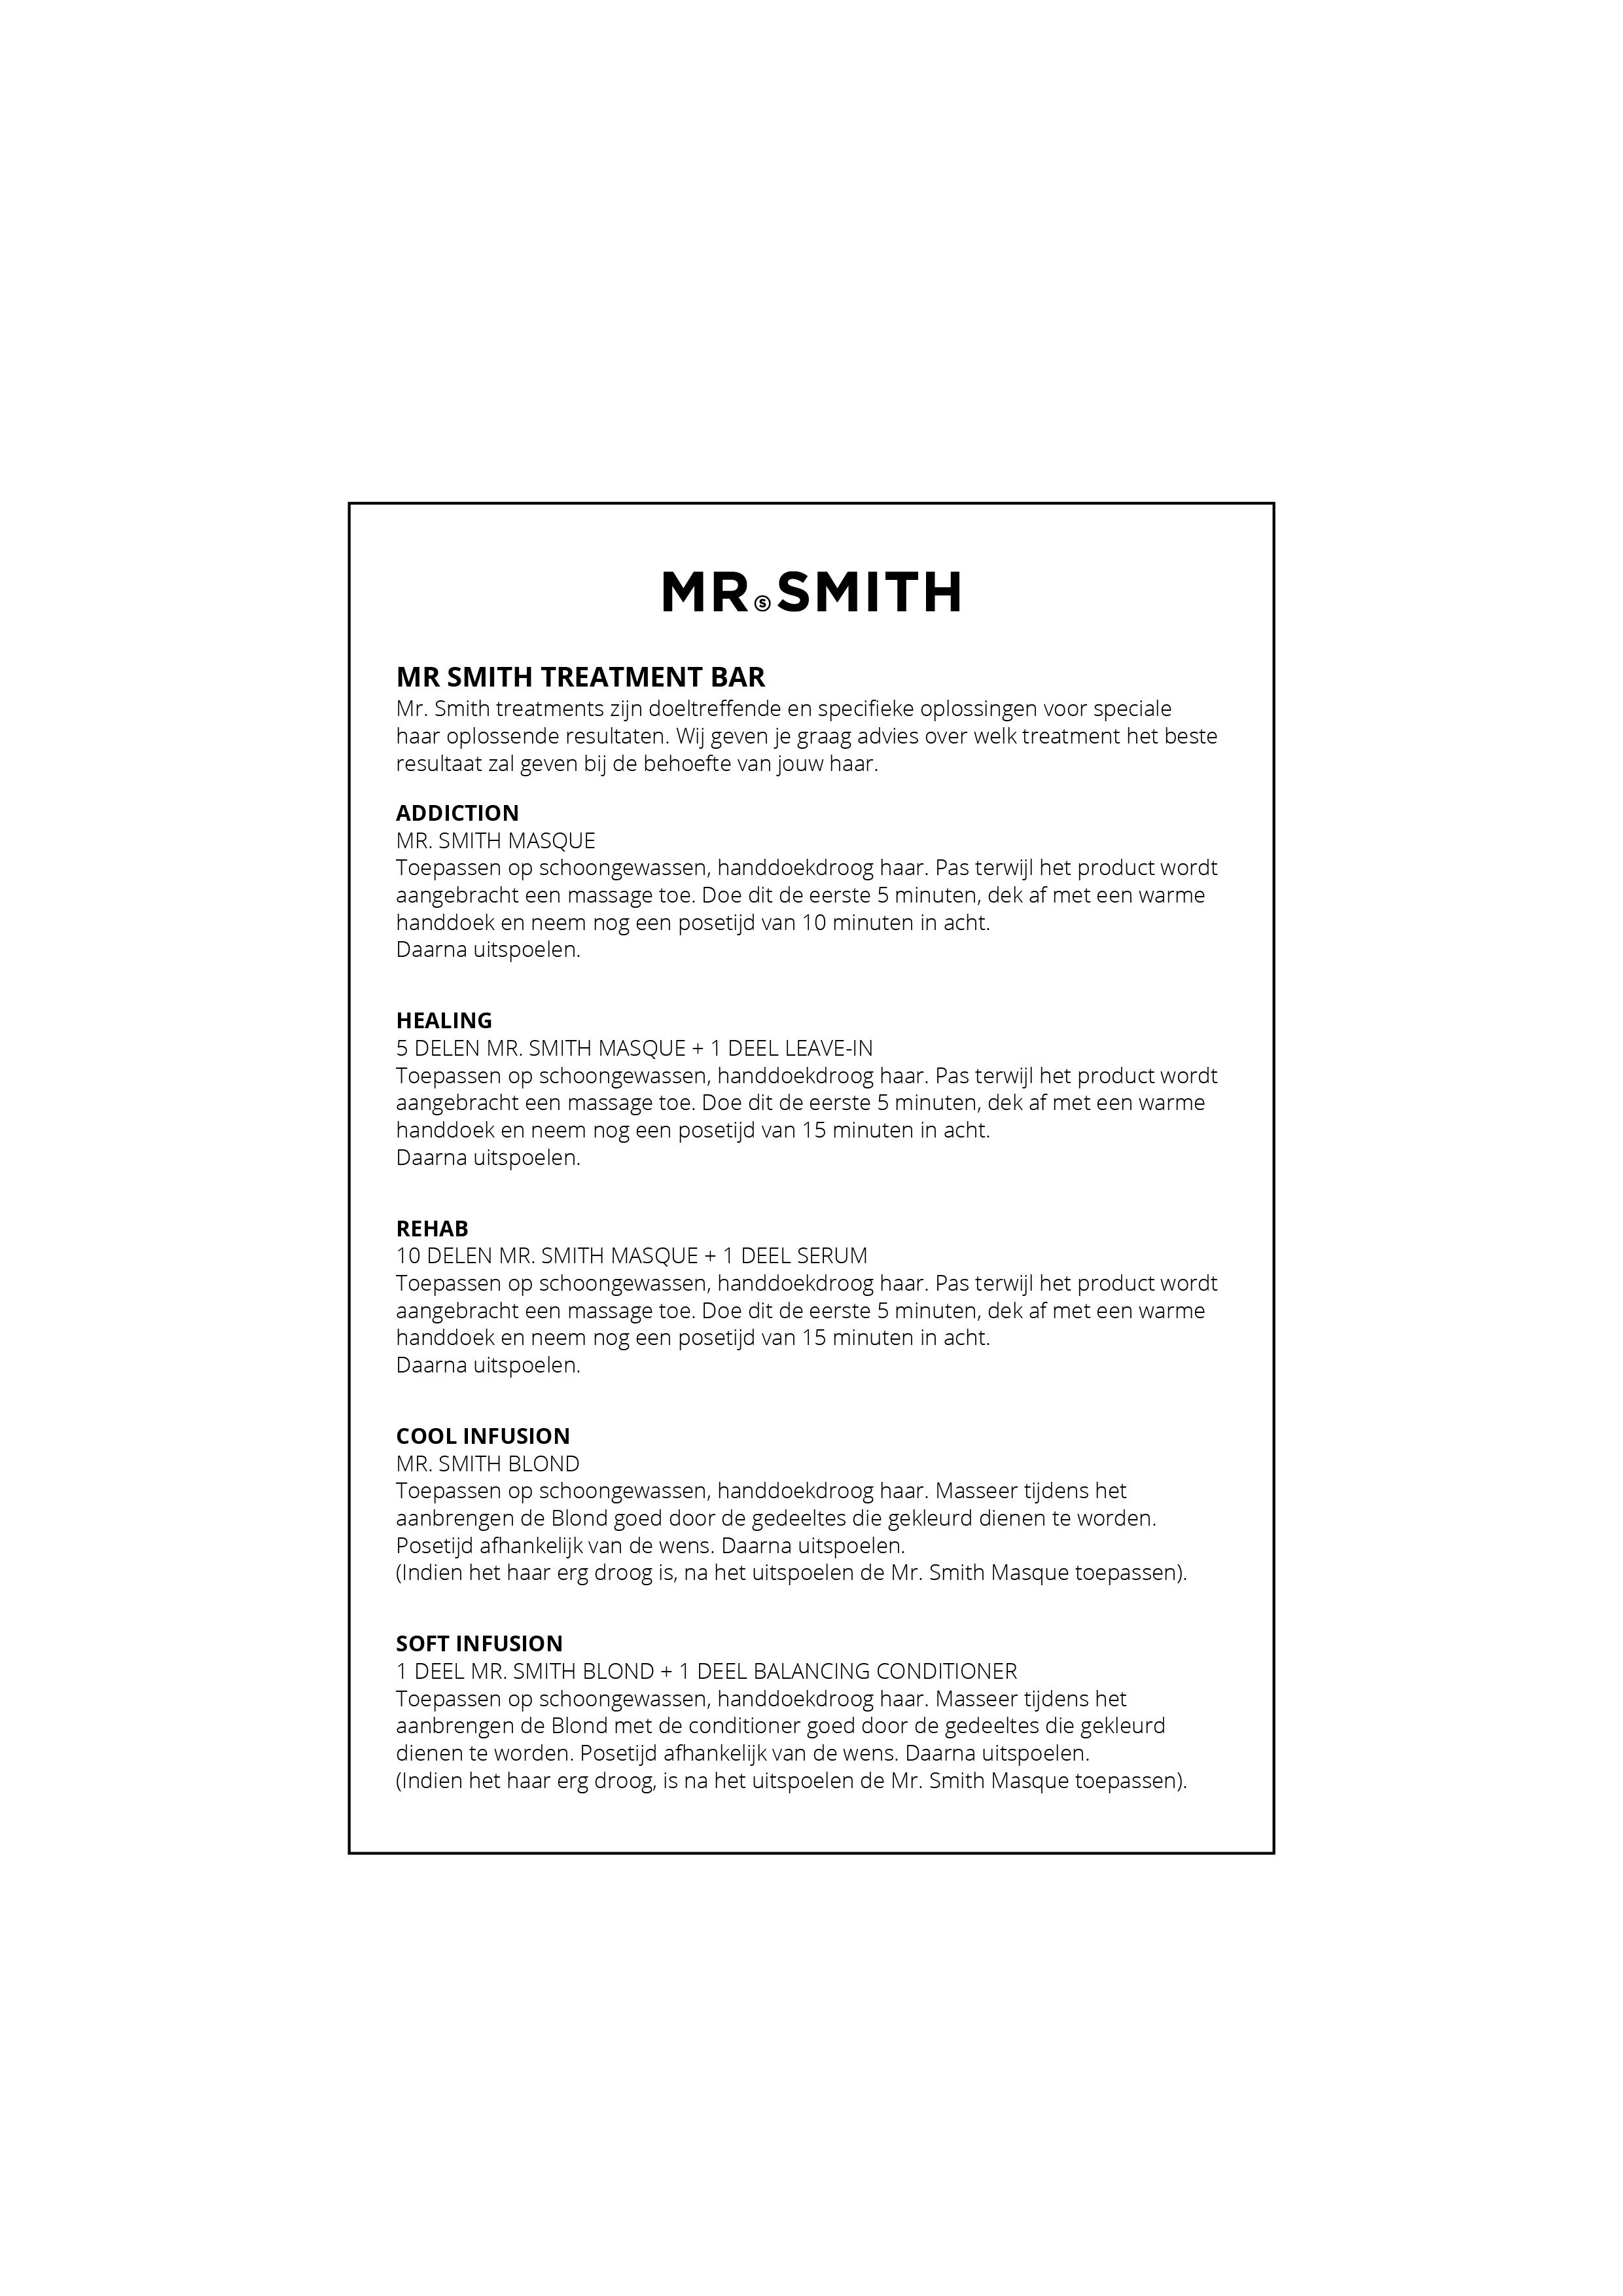 MR. SMITH Treatment Bar